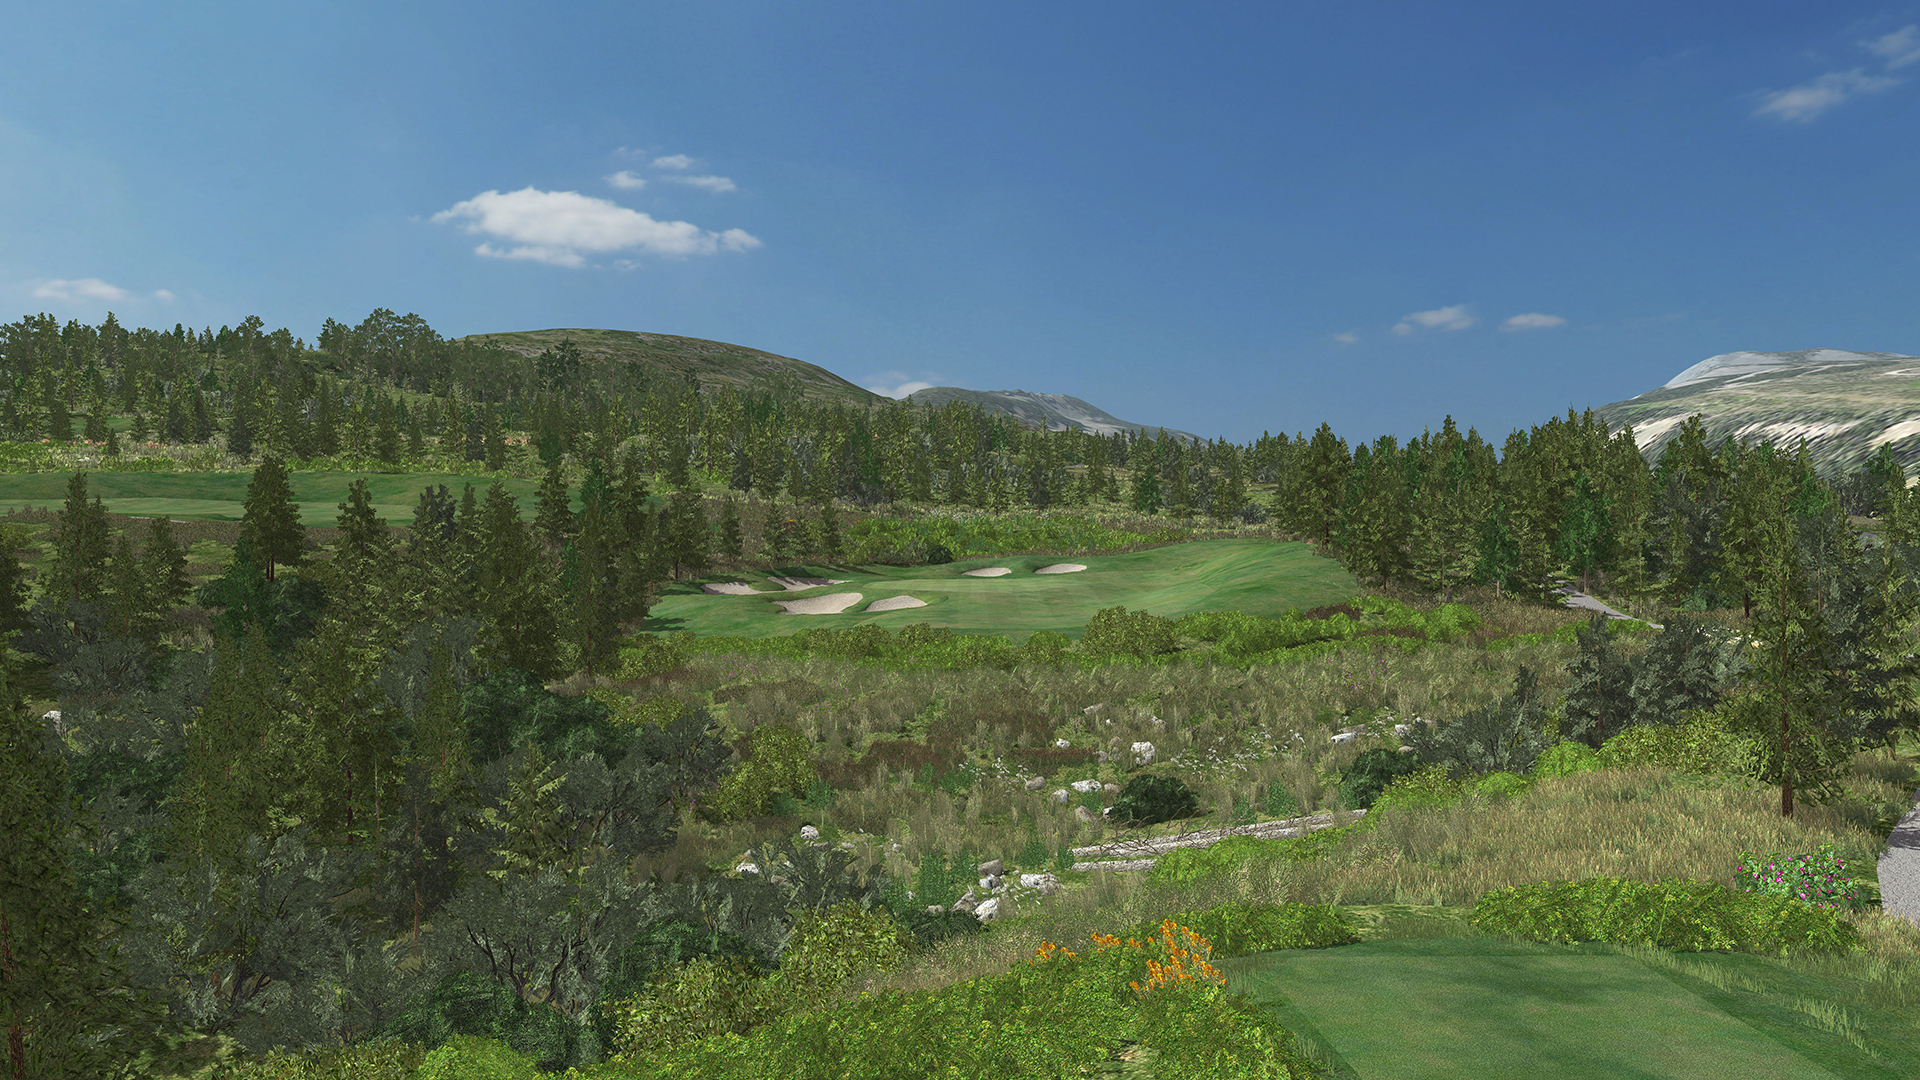 Yellowstone Golf Course